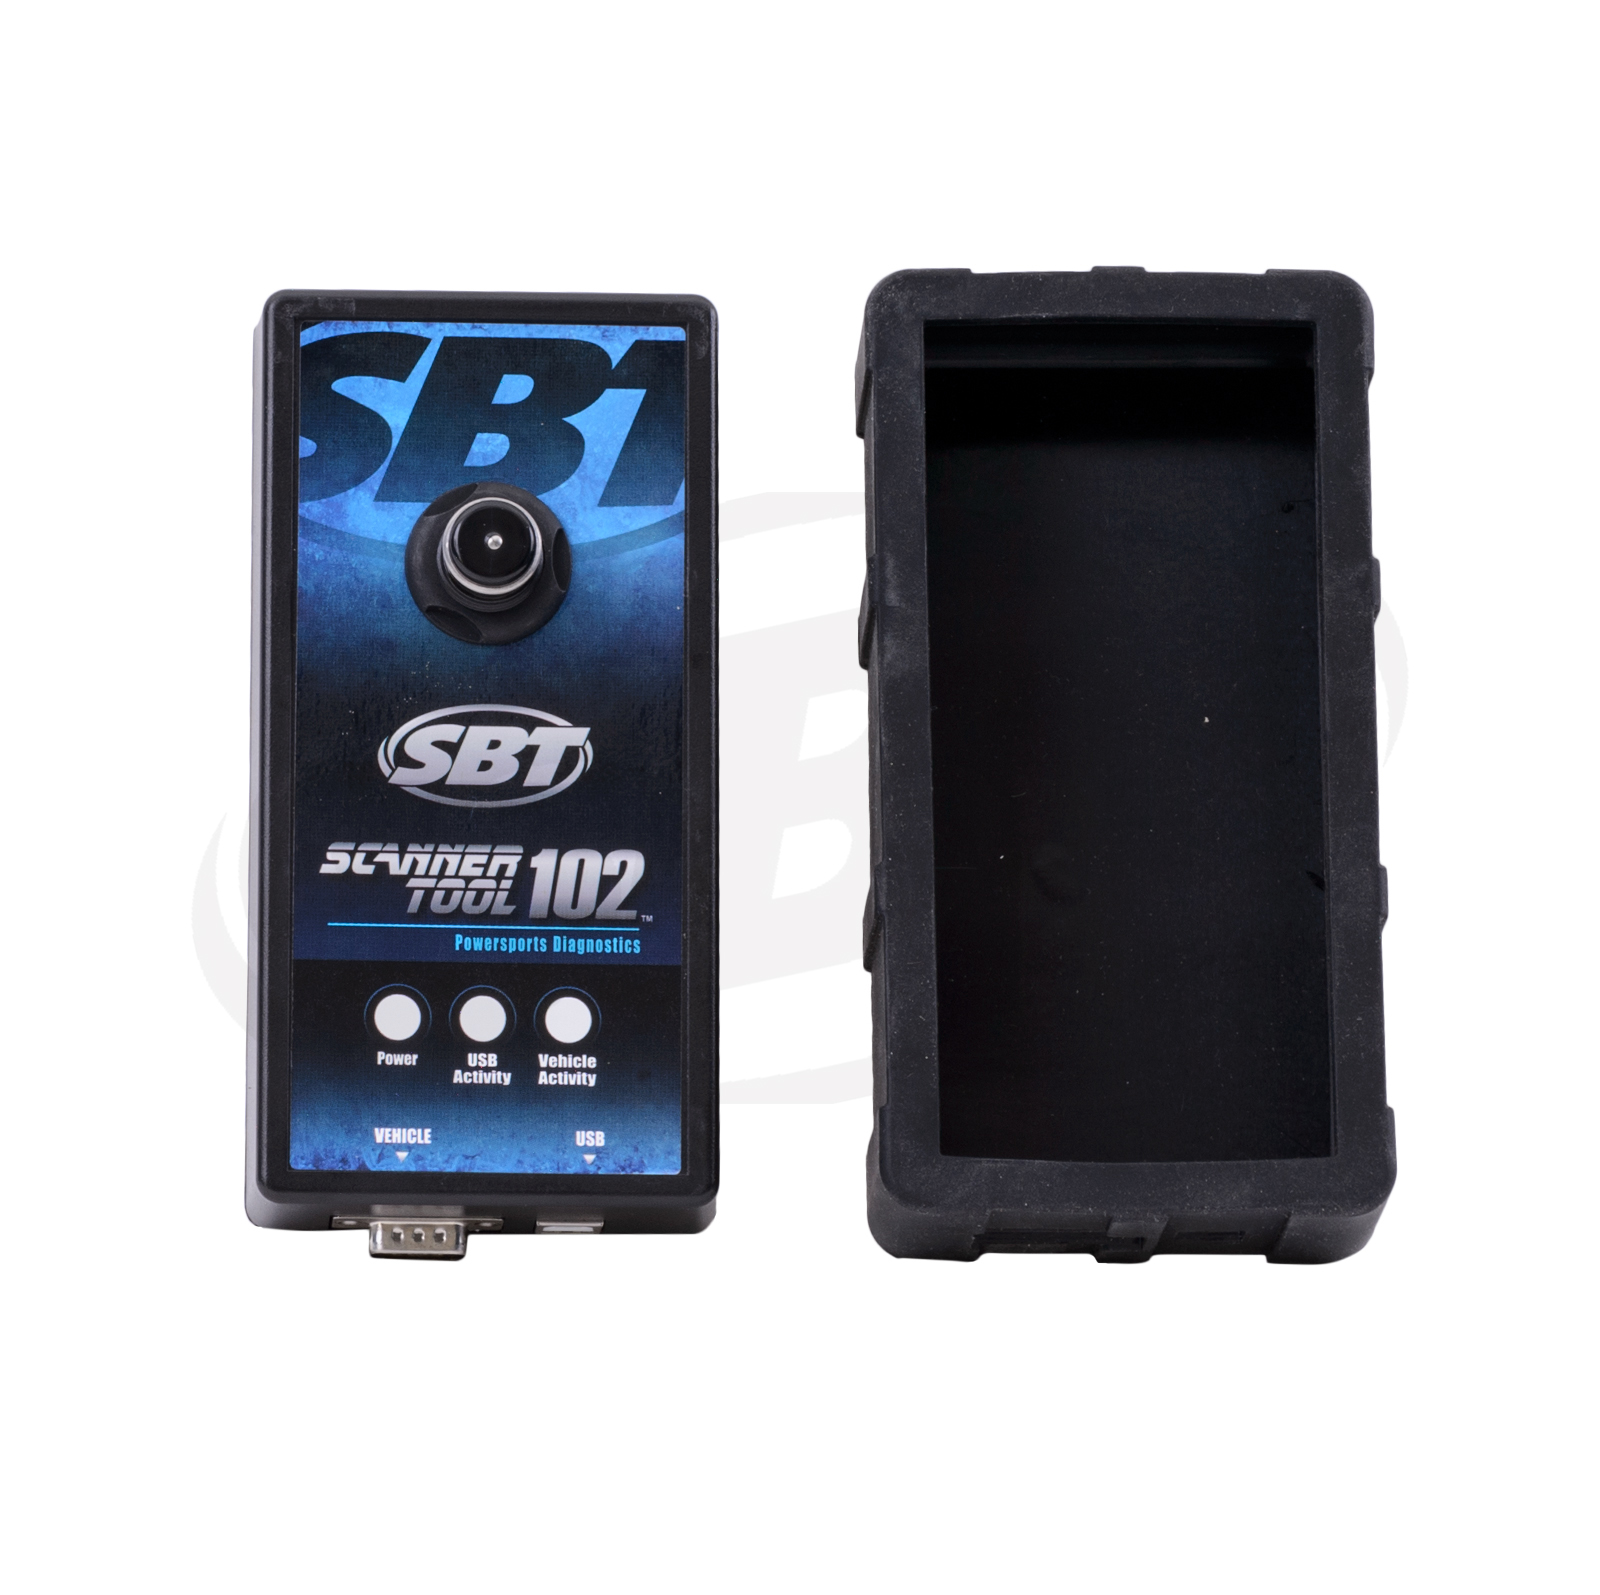 Sbt scanner tool 102 powersports diagnostics